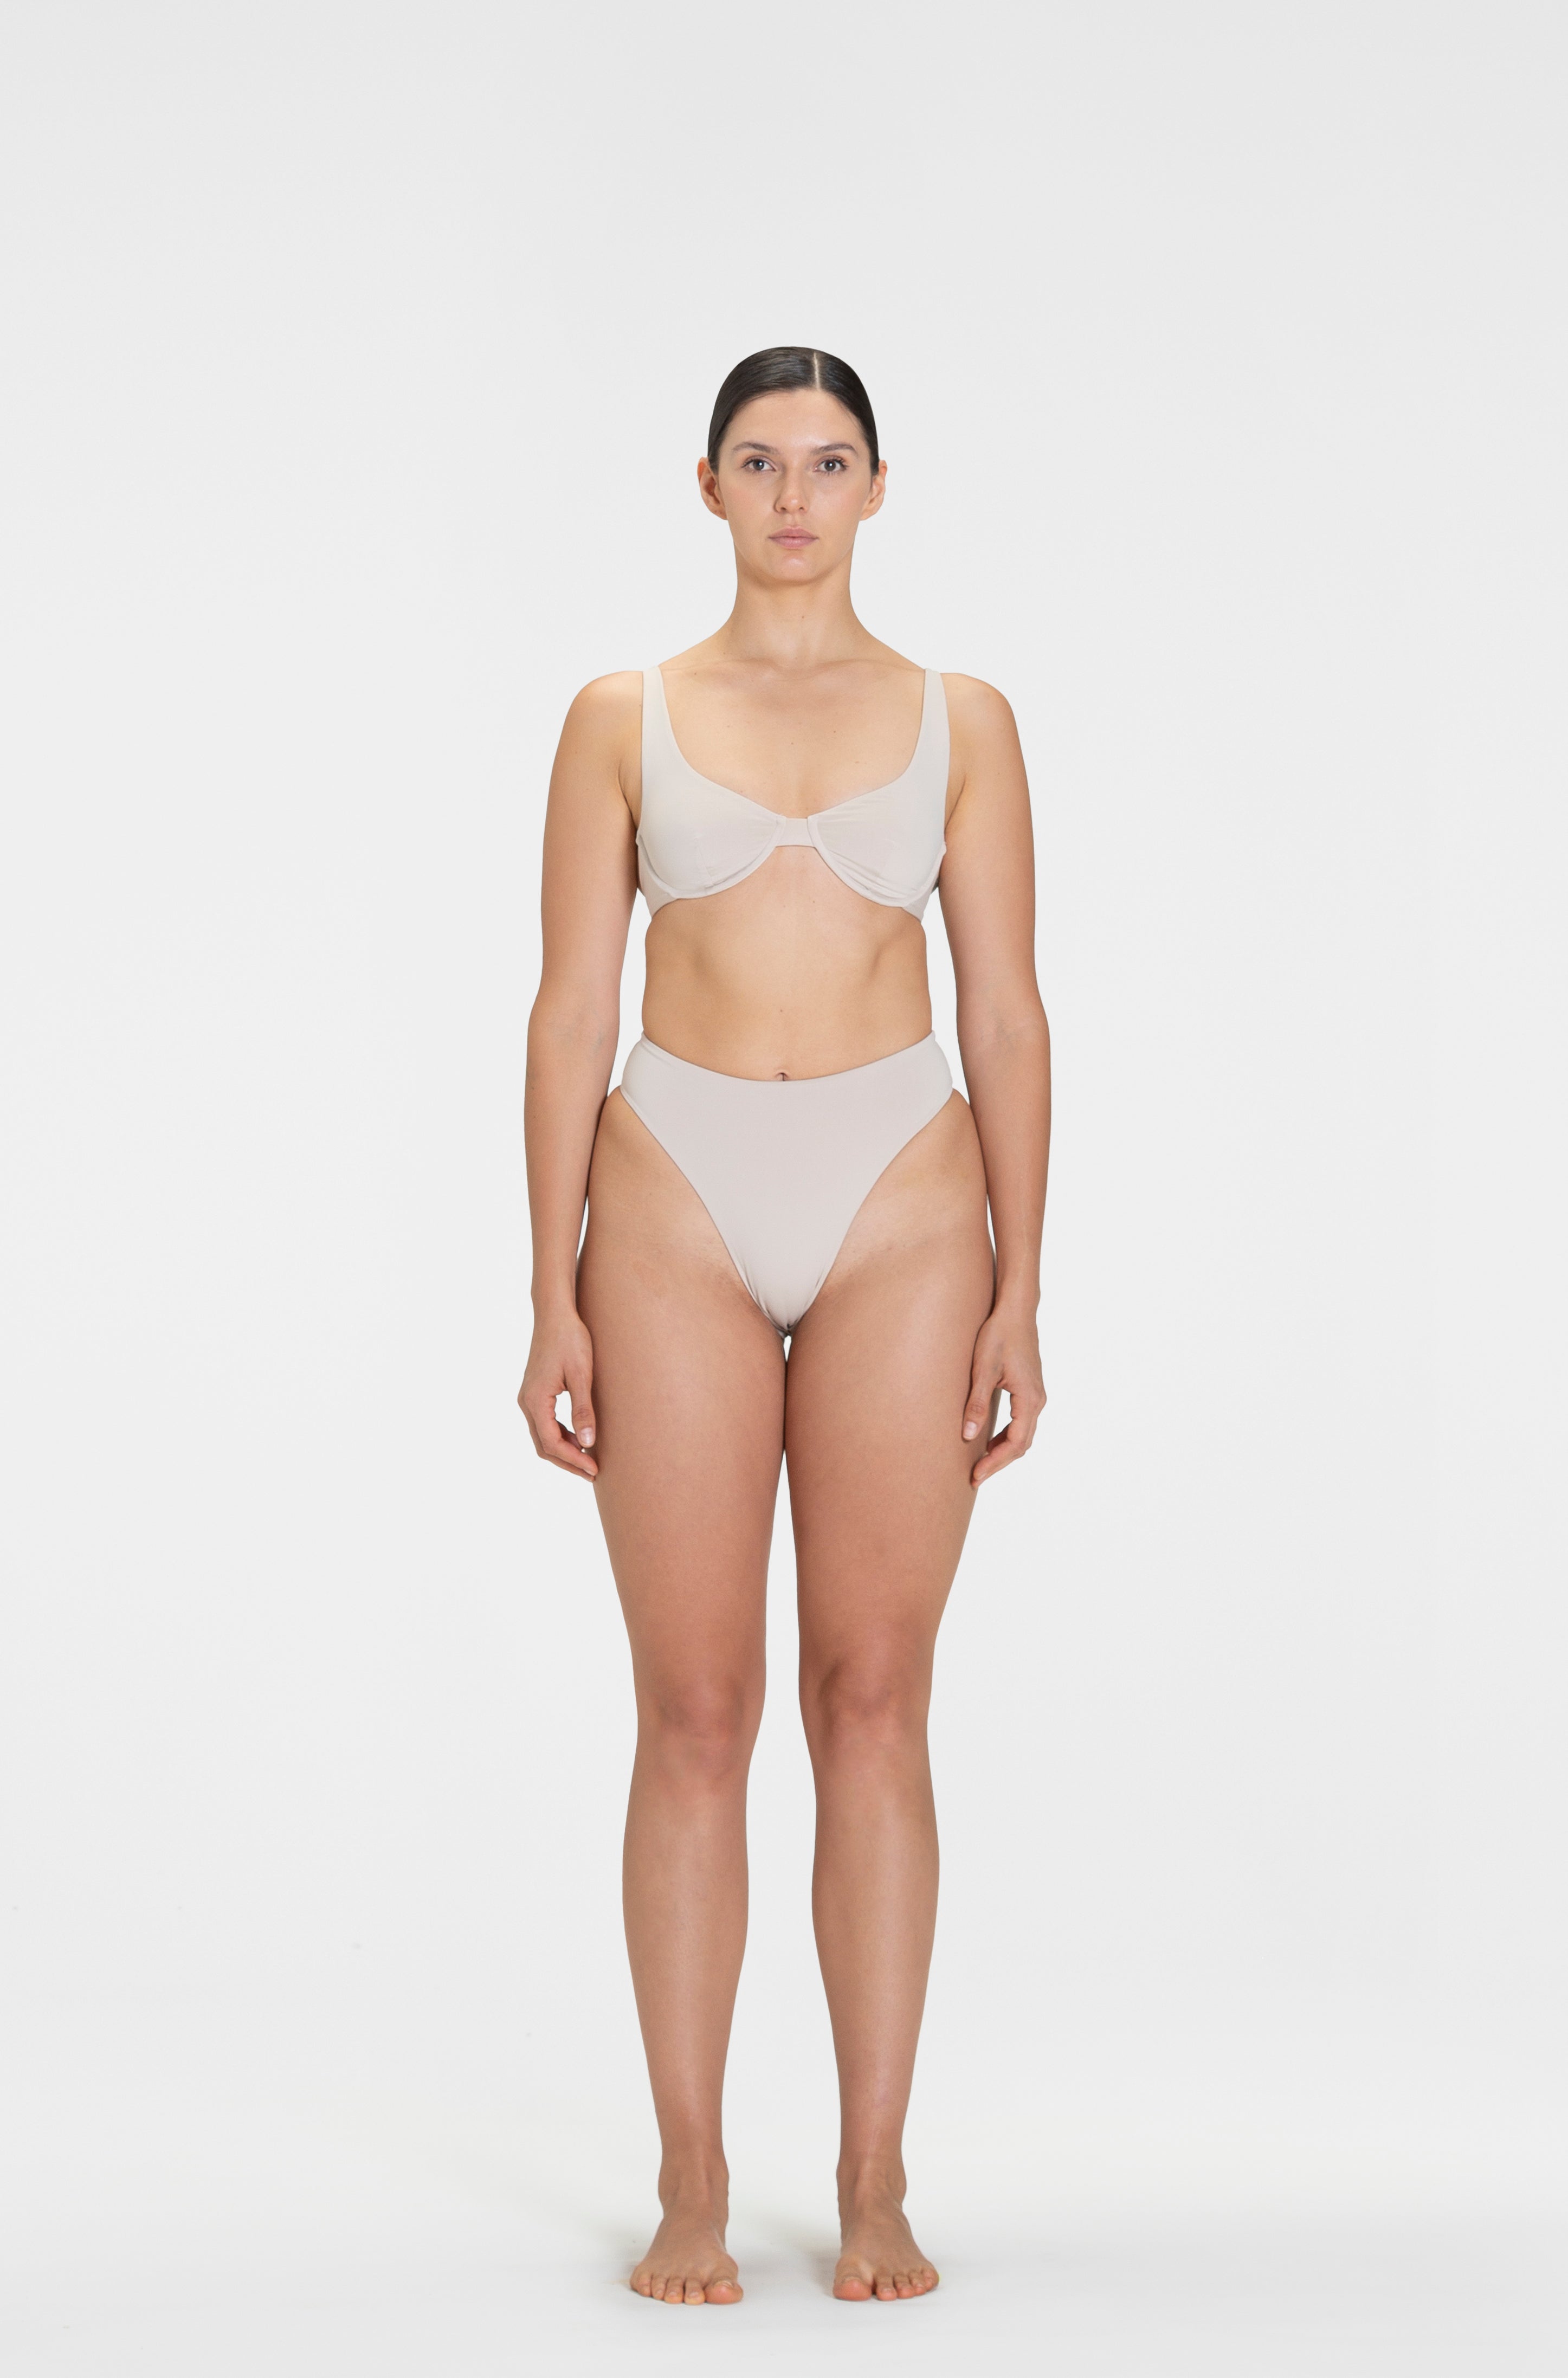 Willow Top-Coconut bikini bottom